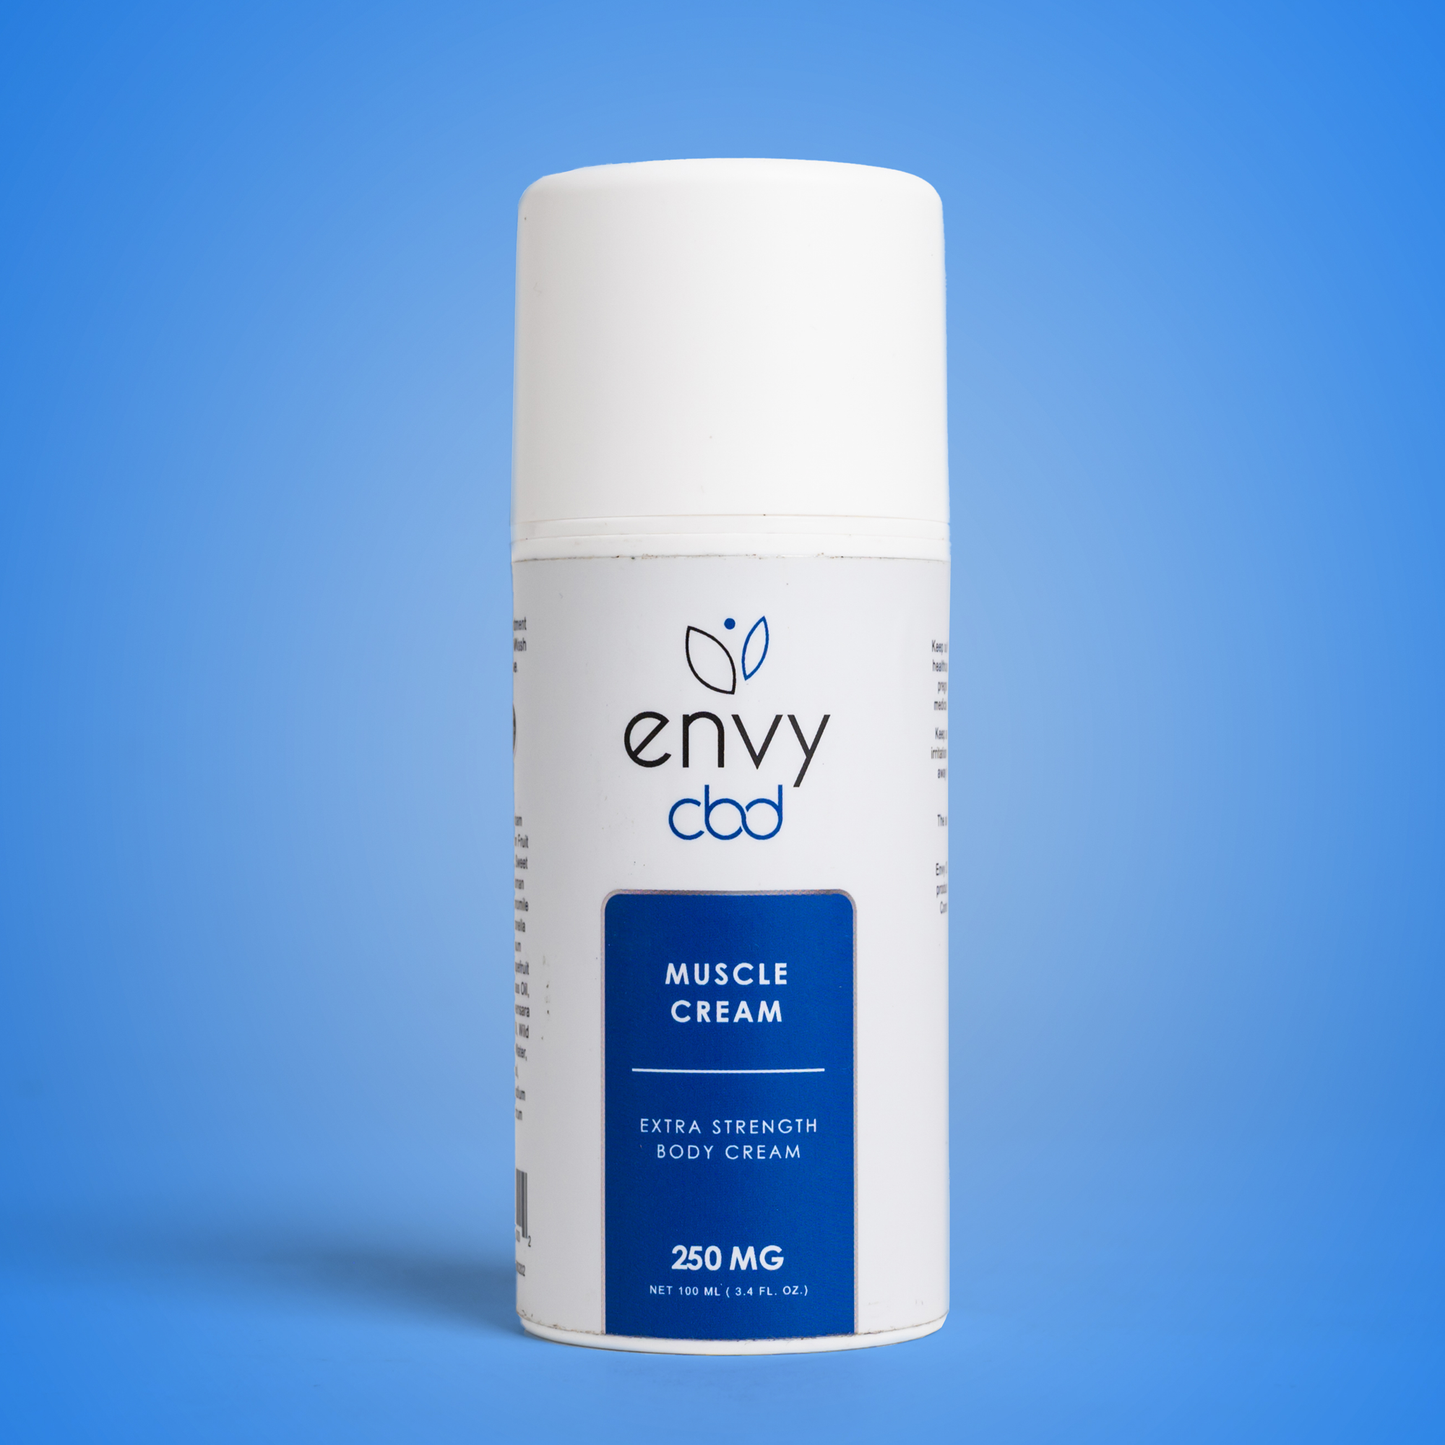 Envy CBD – Muscle Cream 250MG Broad Spectrum CBD Topical Best Sales Price - Tincture Oil